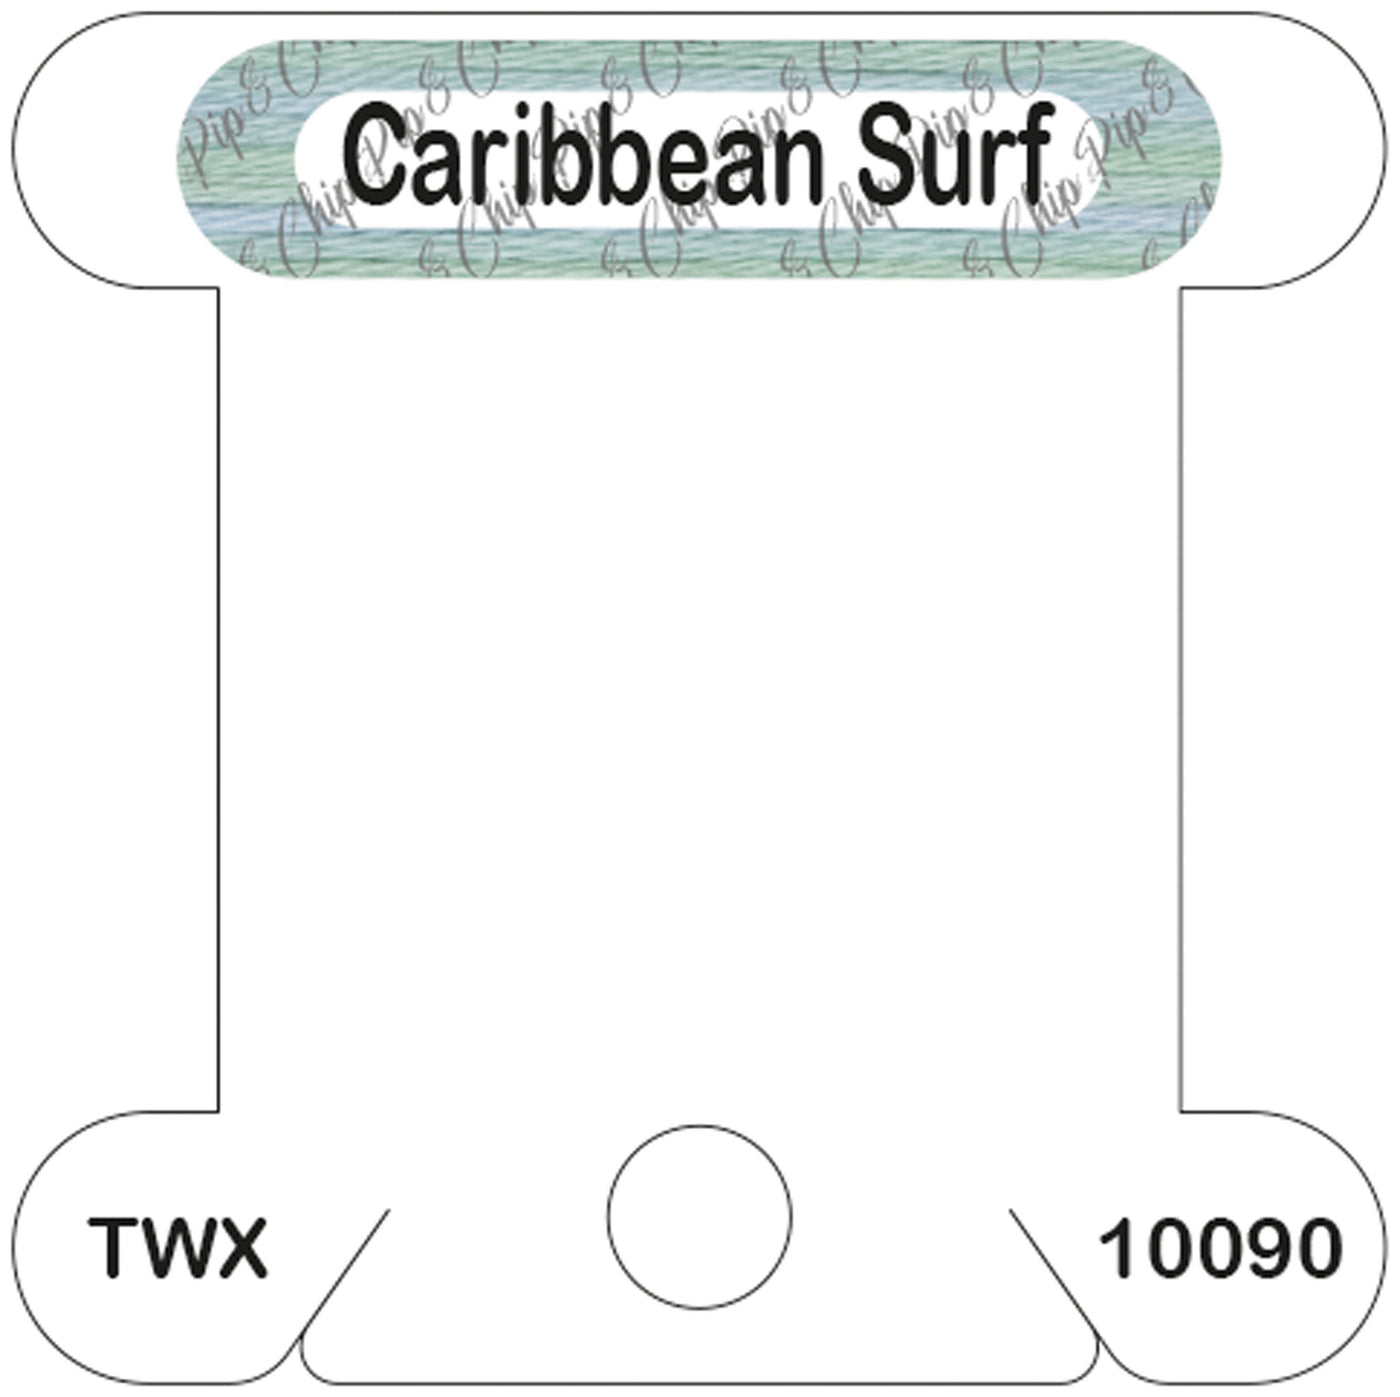 ThreadworX Caribbean Surf acrylic bobbin